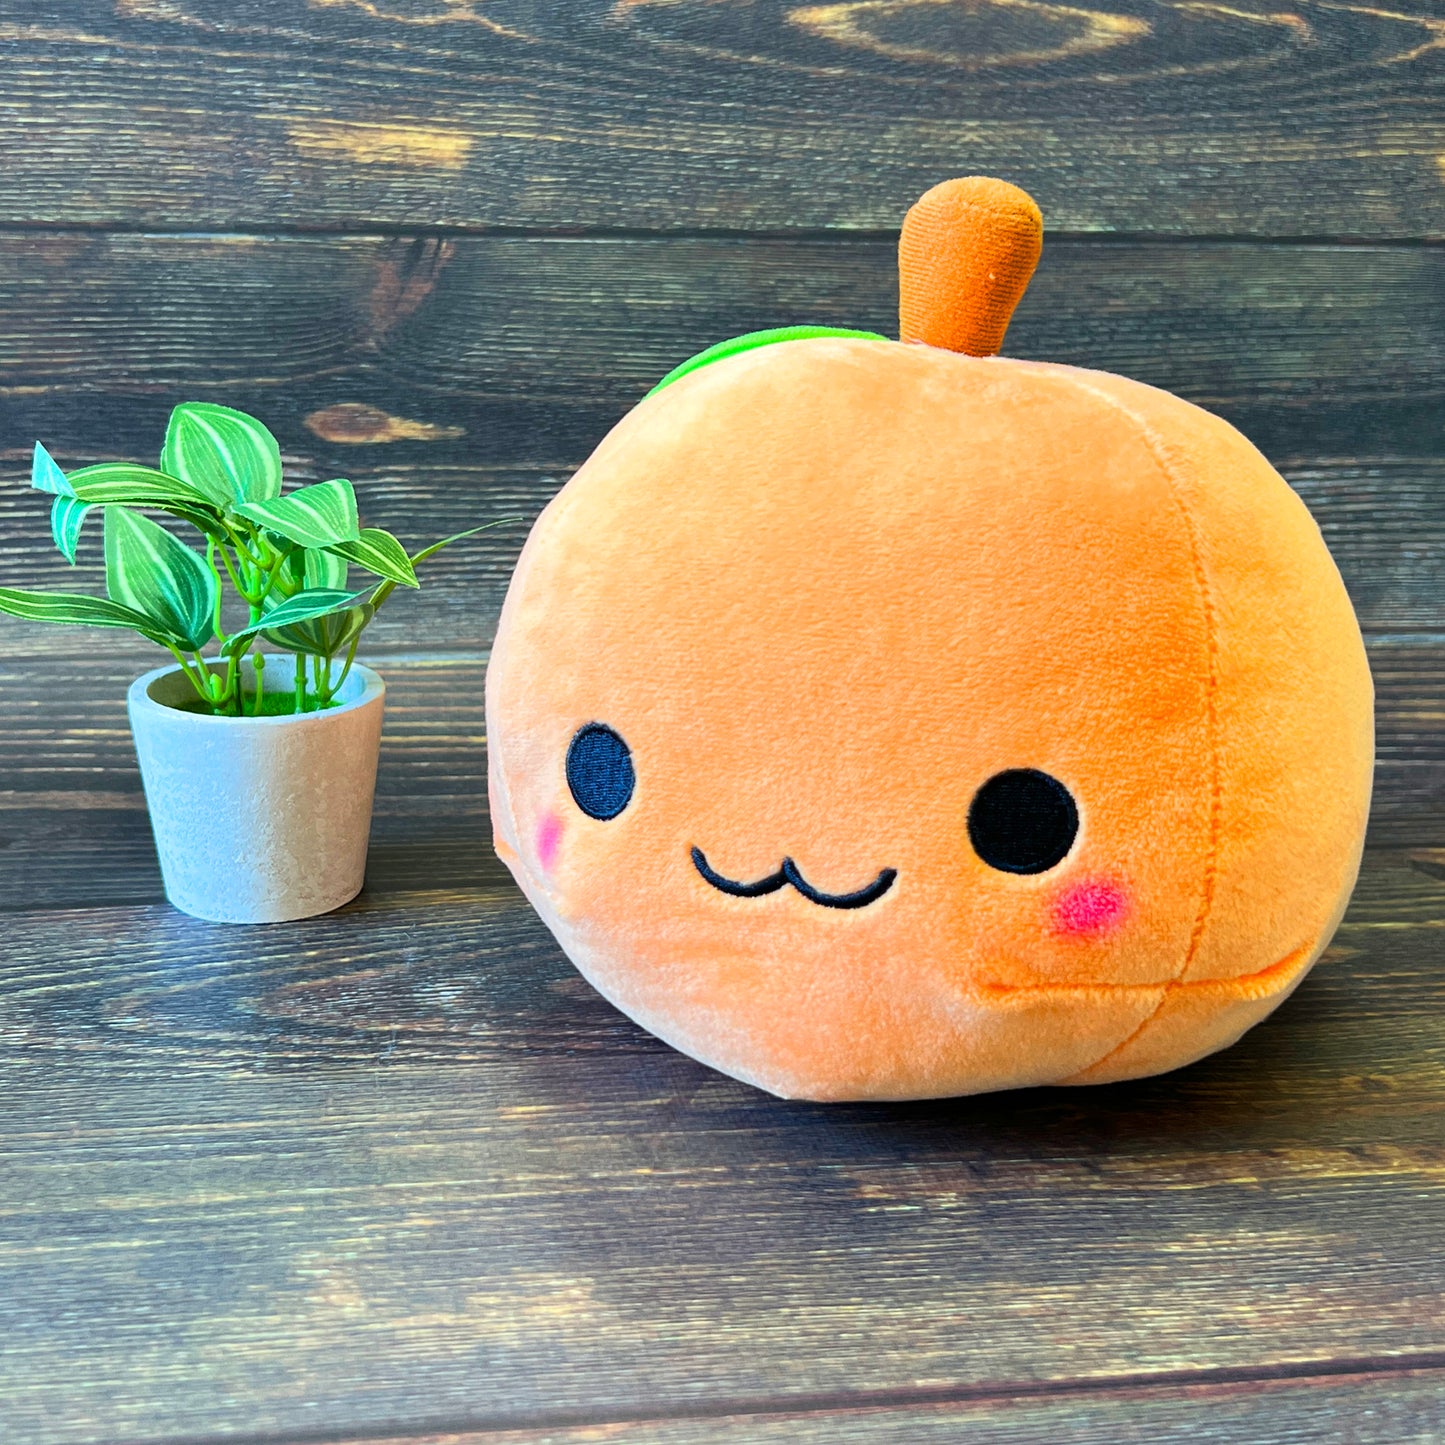 Impression of Orange Fruit Stuffed Toy Mikanchan Orange